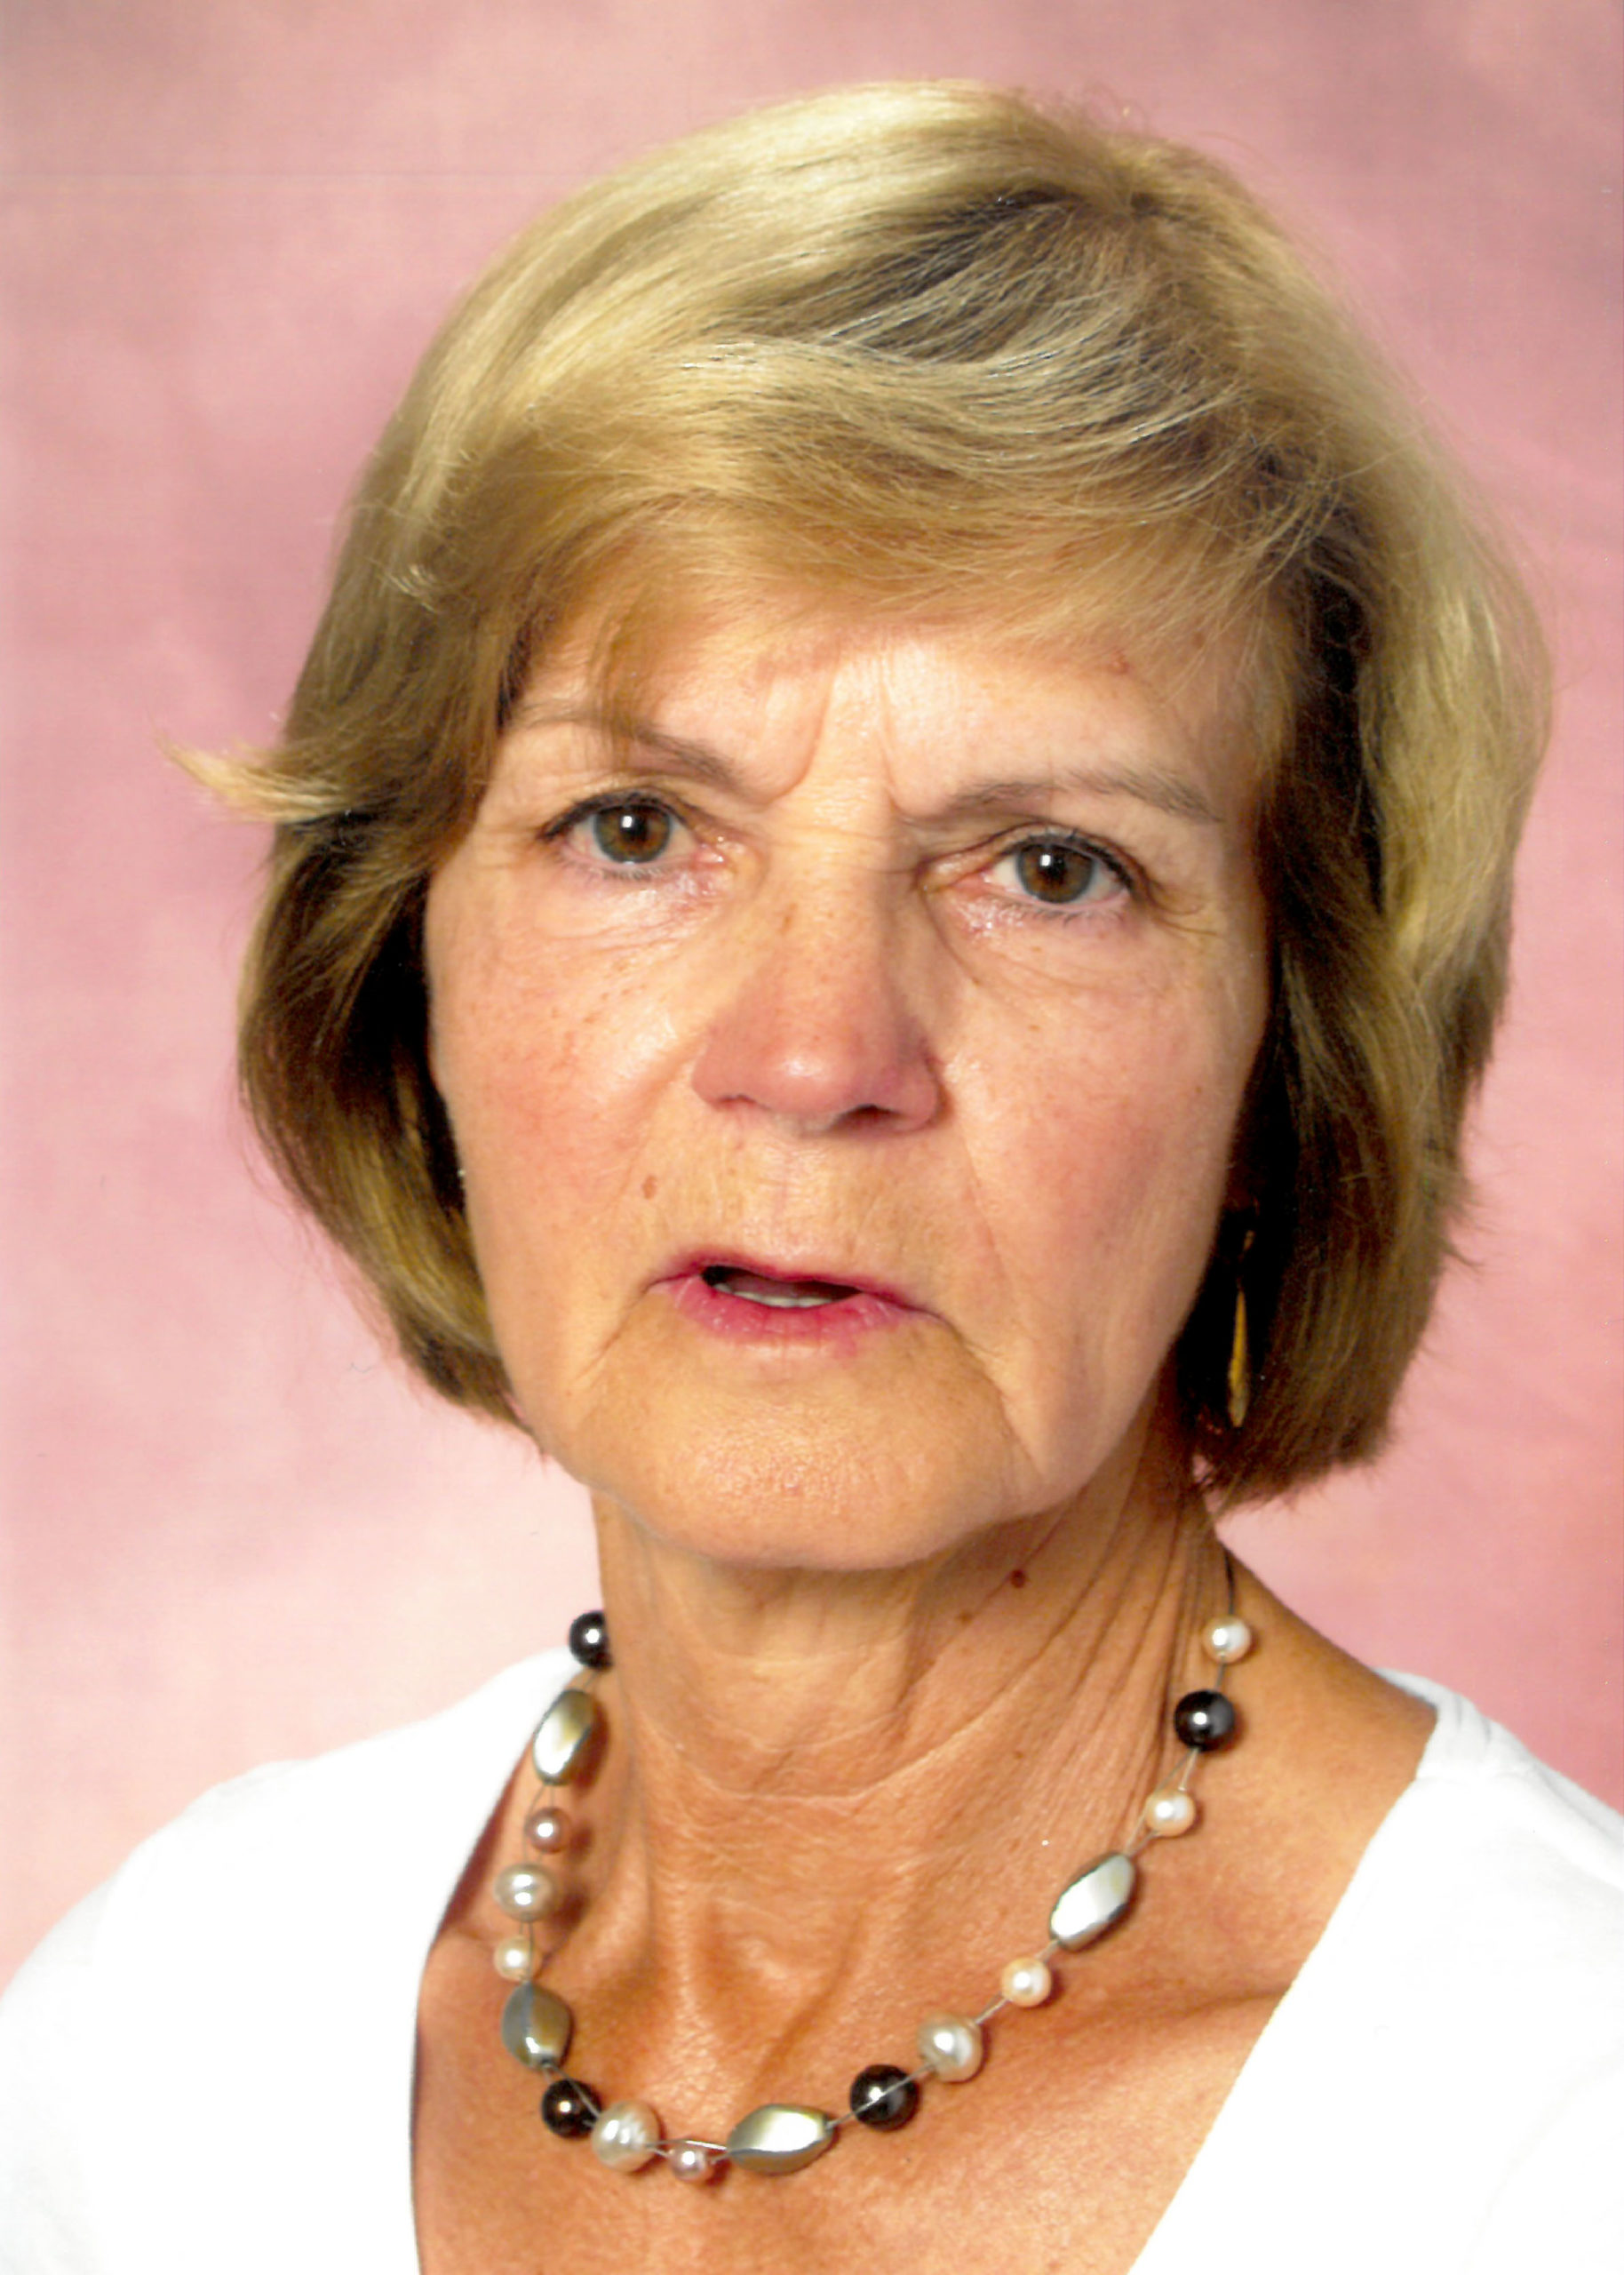 Karla Kornfeld (82)